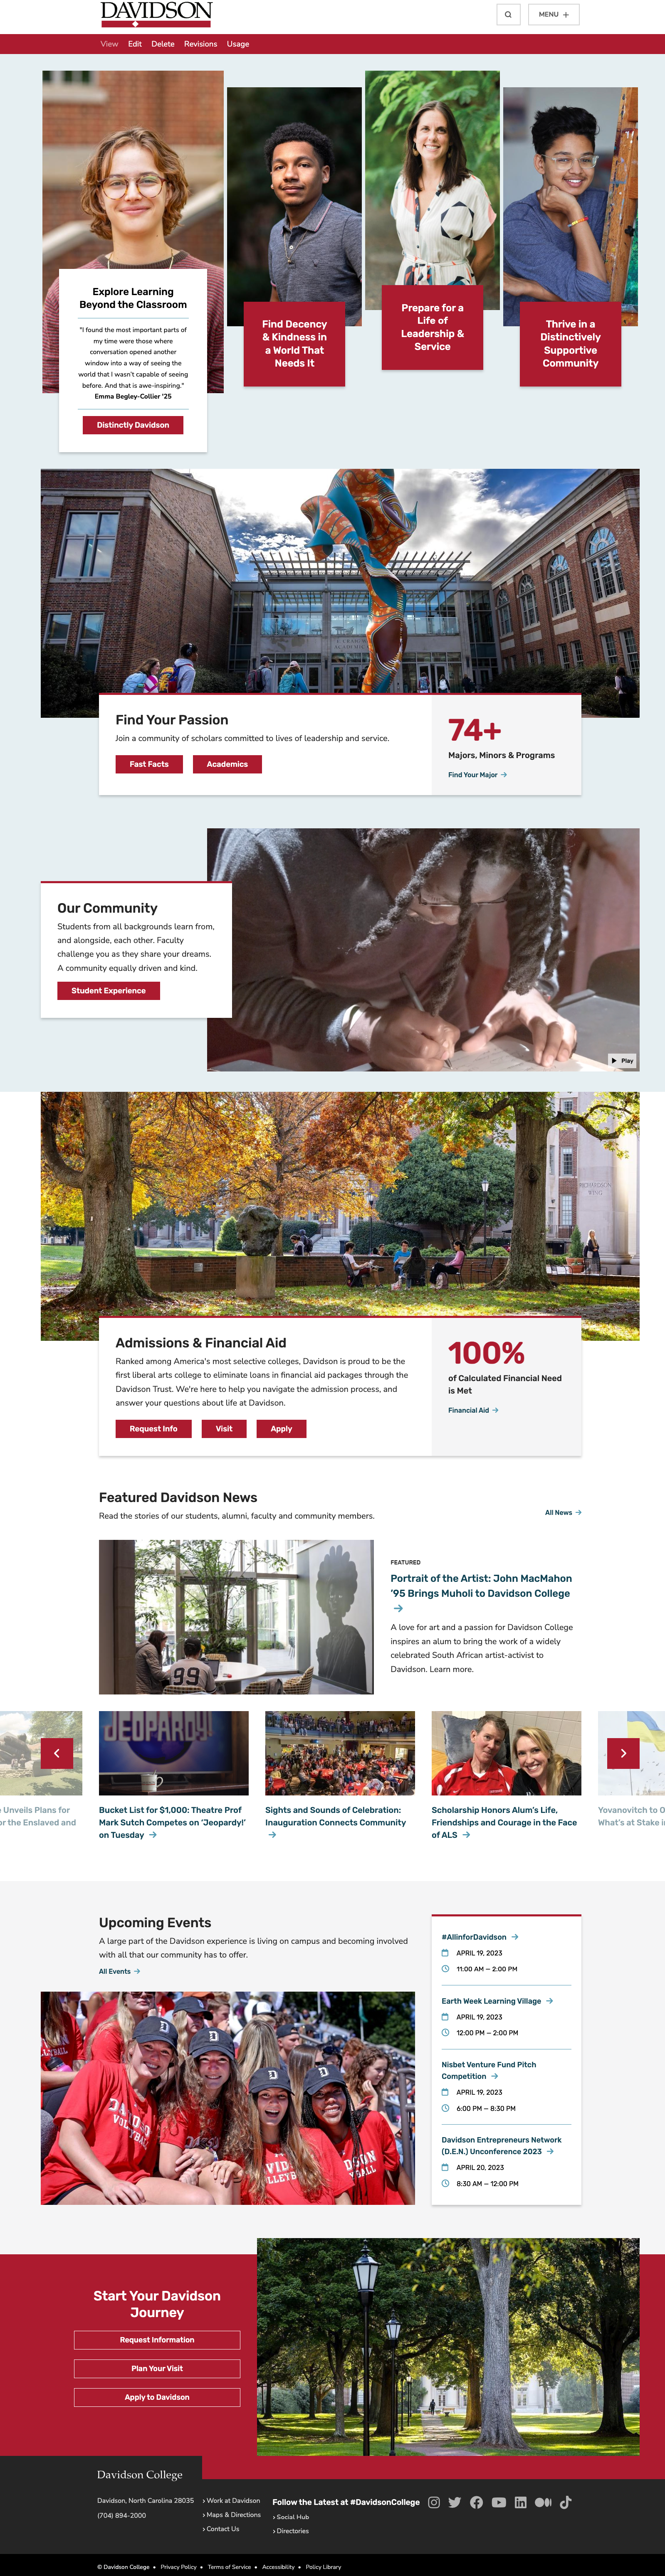 Screenshot of Davidson.edu Homepage